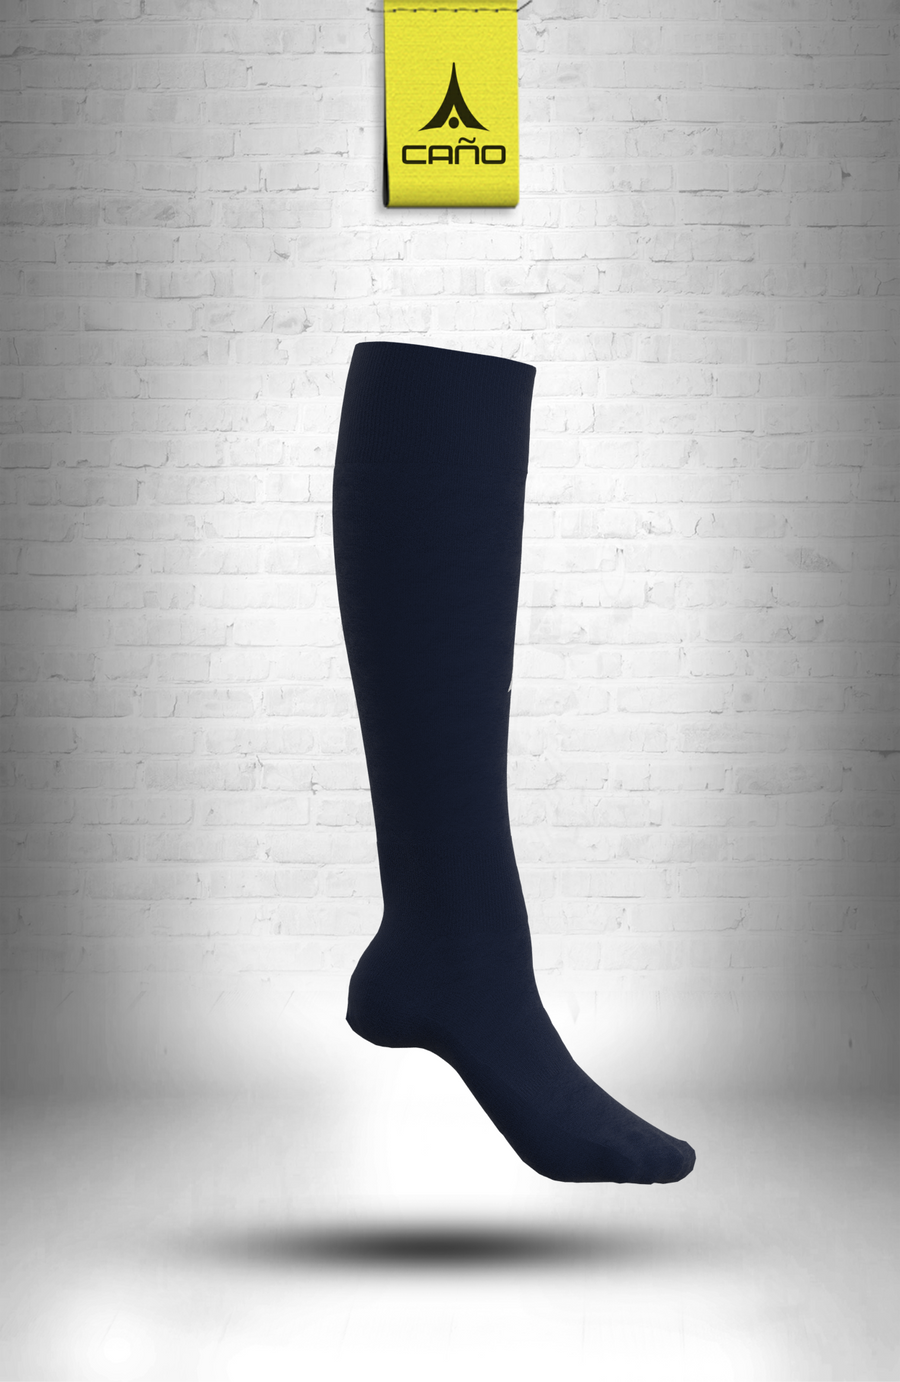 $10.00 - Caño Navy Blue Soccer Sock